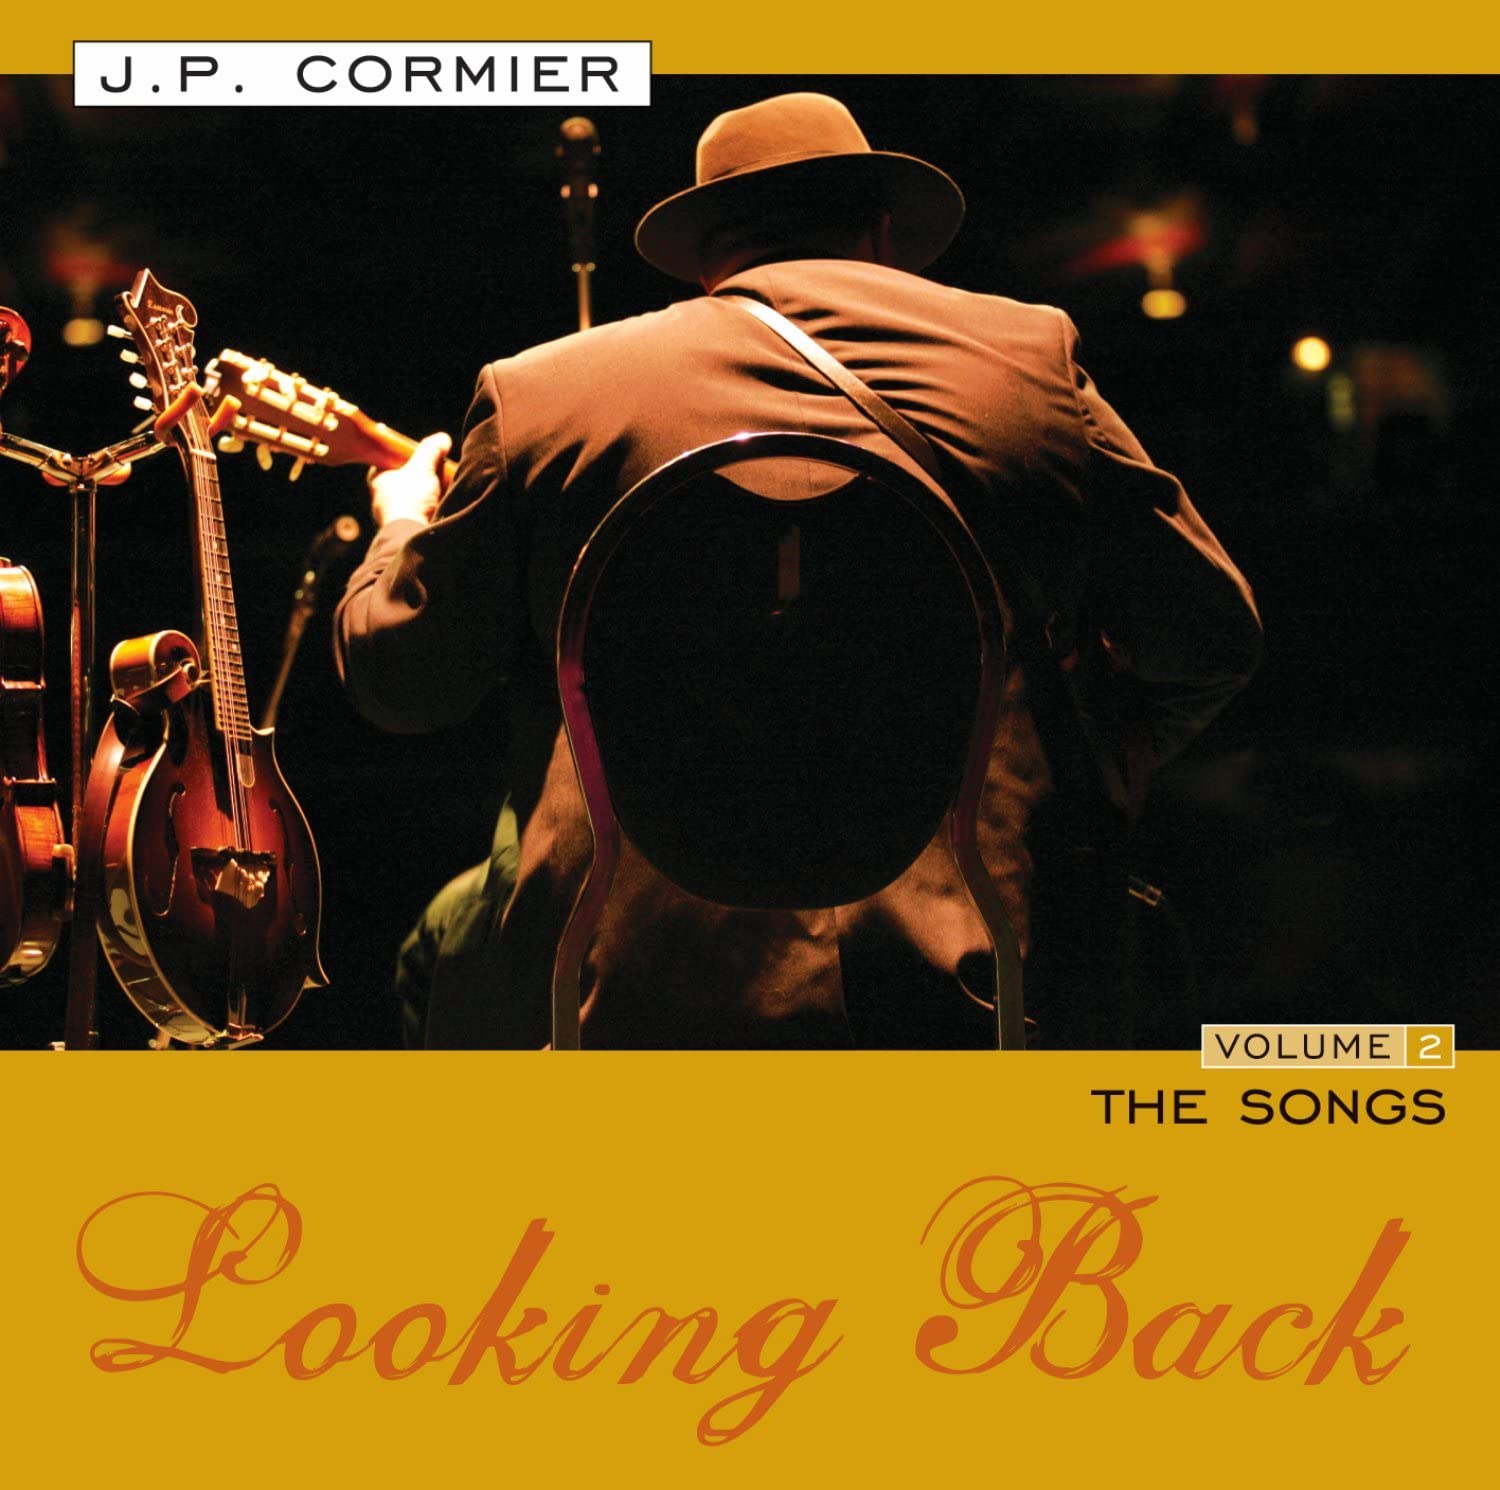 J.P. Cormier - Looking Back Vol. 2 : The Songs (2005)